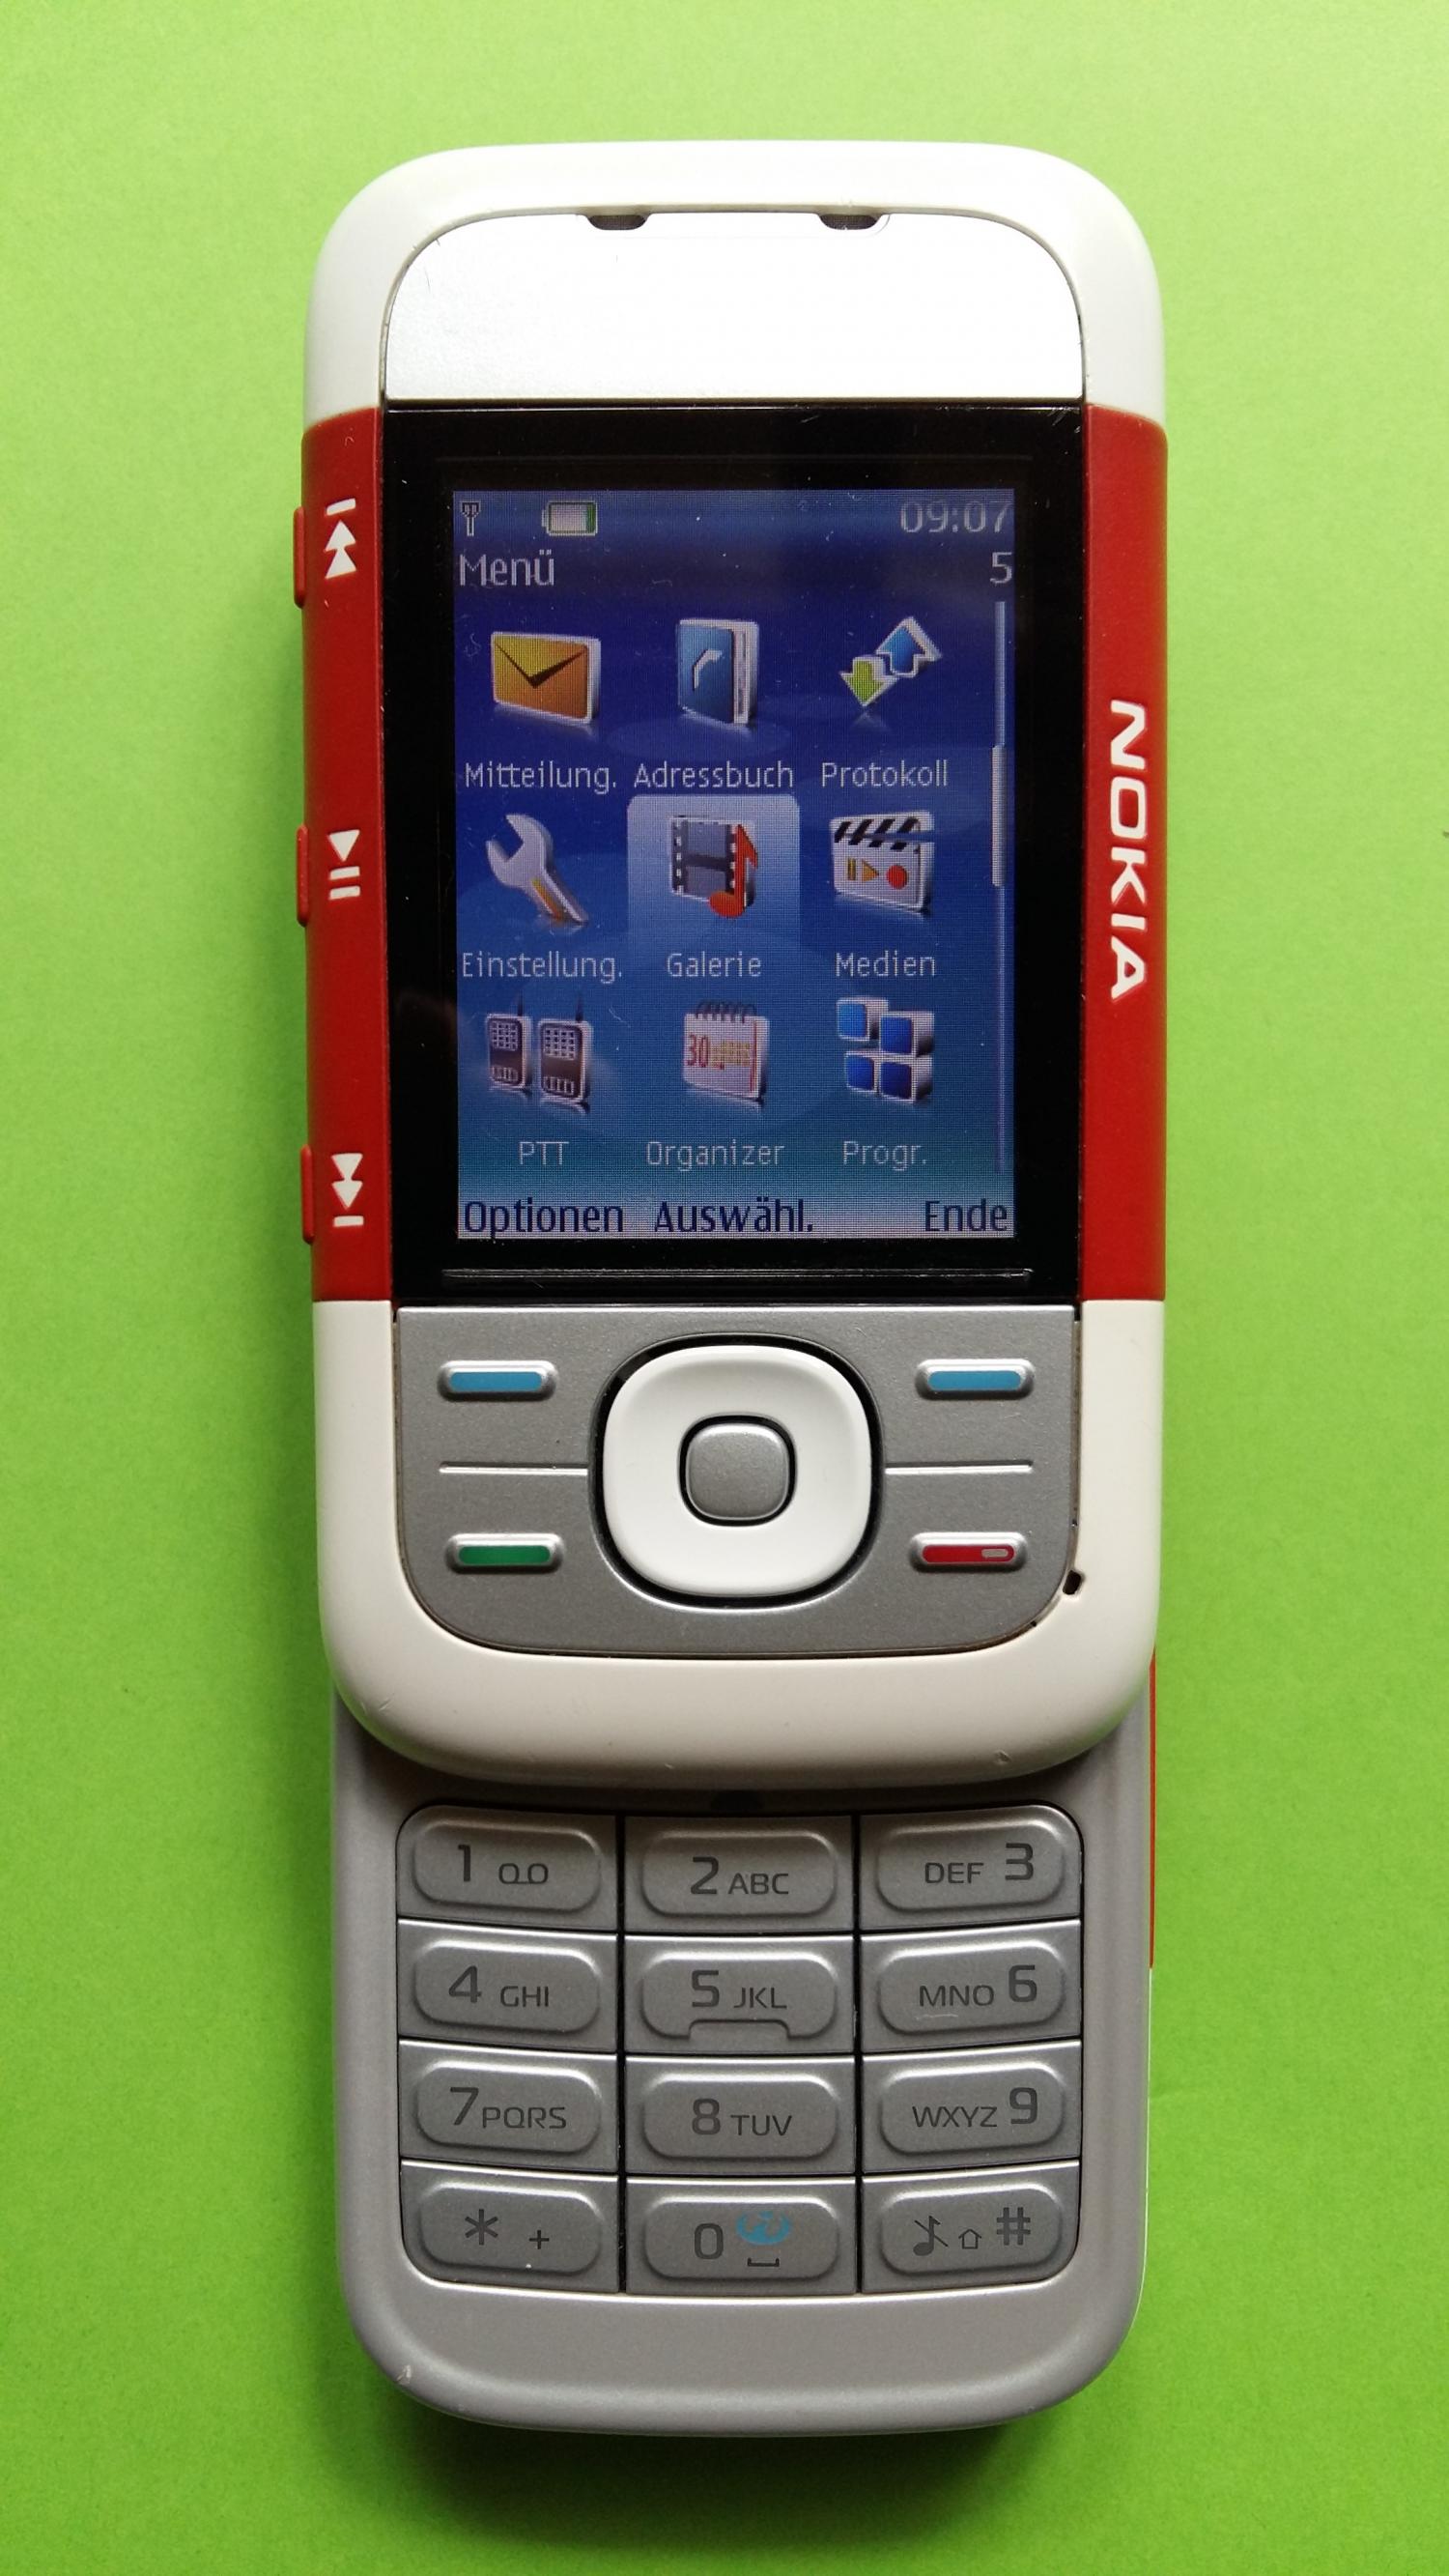 image-7307015-Nokia 5300 XpressMusic (1)2.jpg